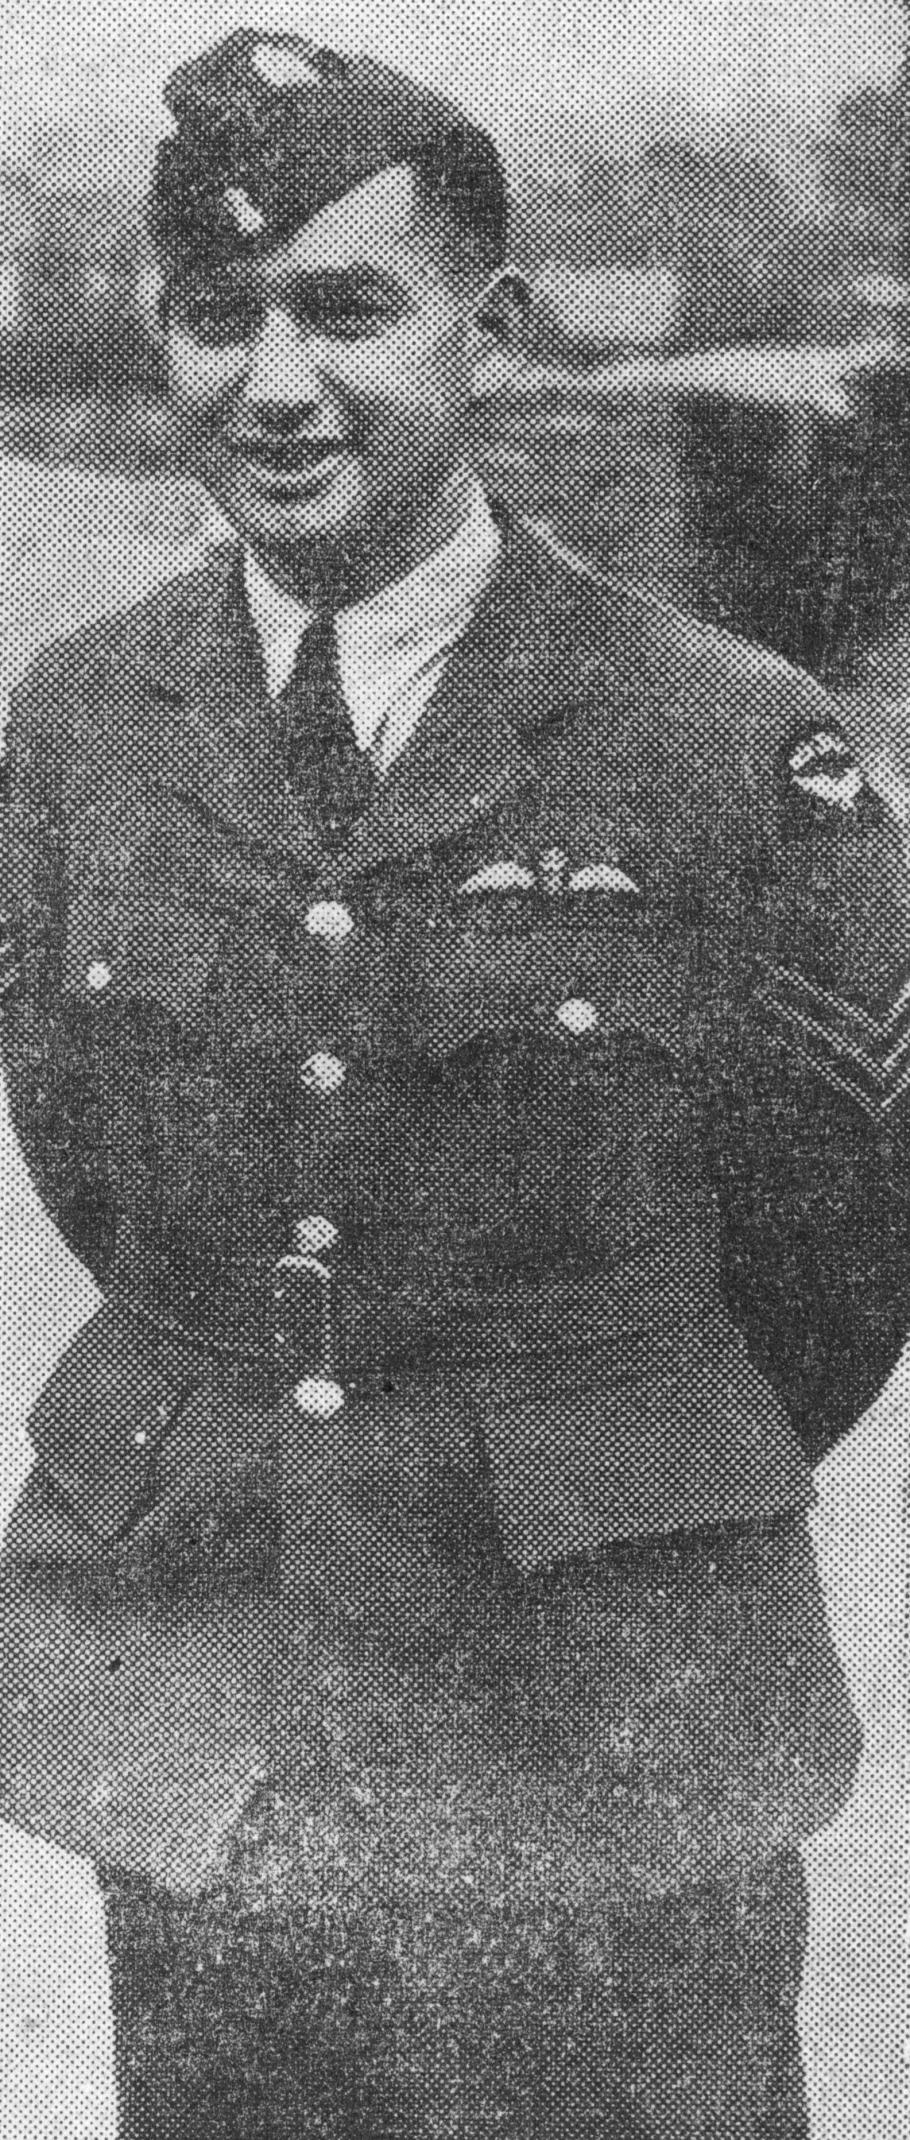 Flight Sgt. Porokoru Patapu “John” Pohe in military uniform